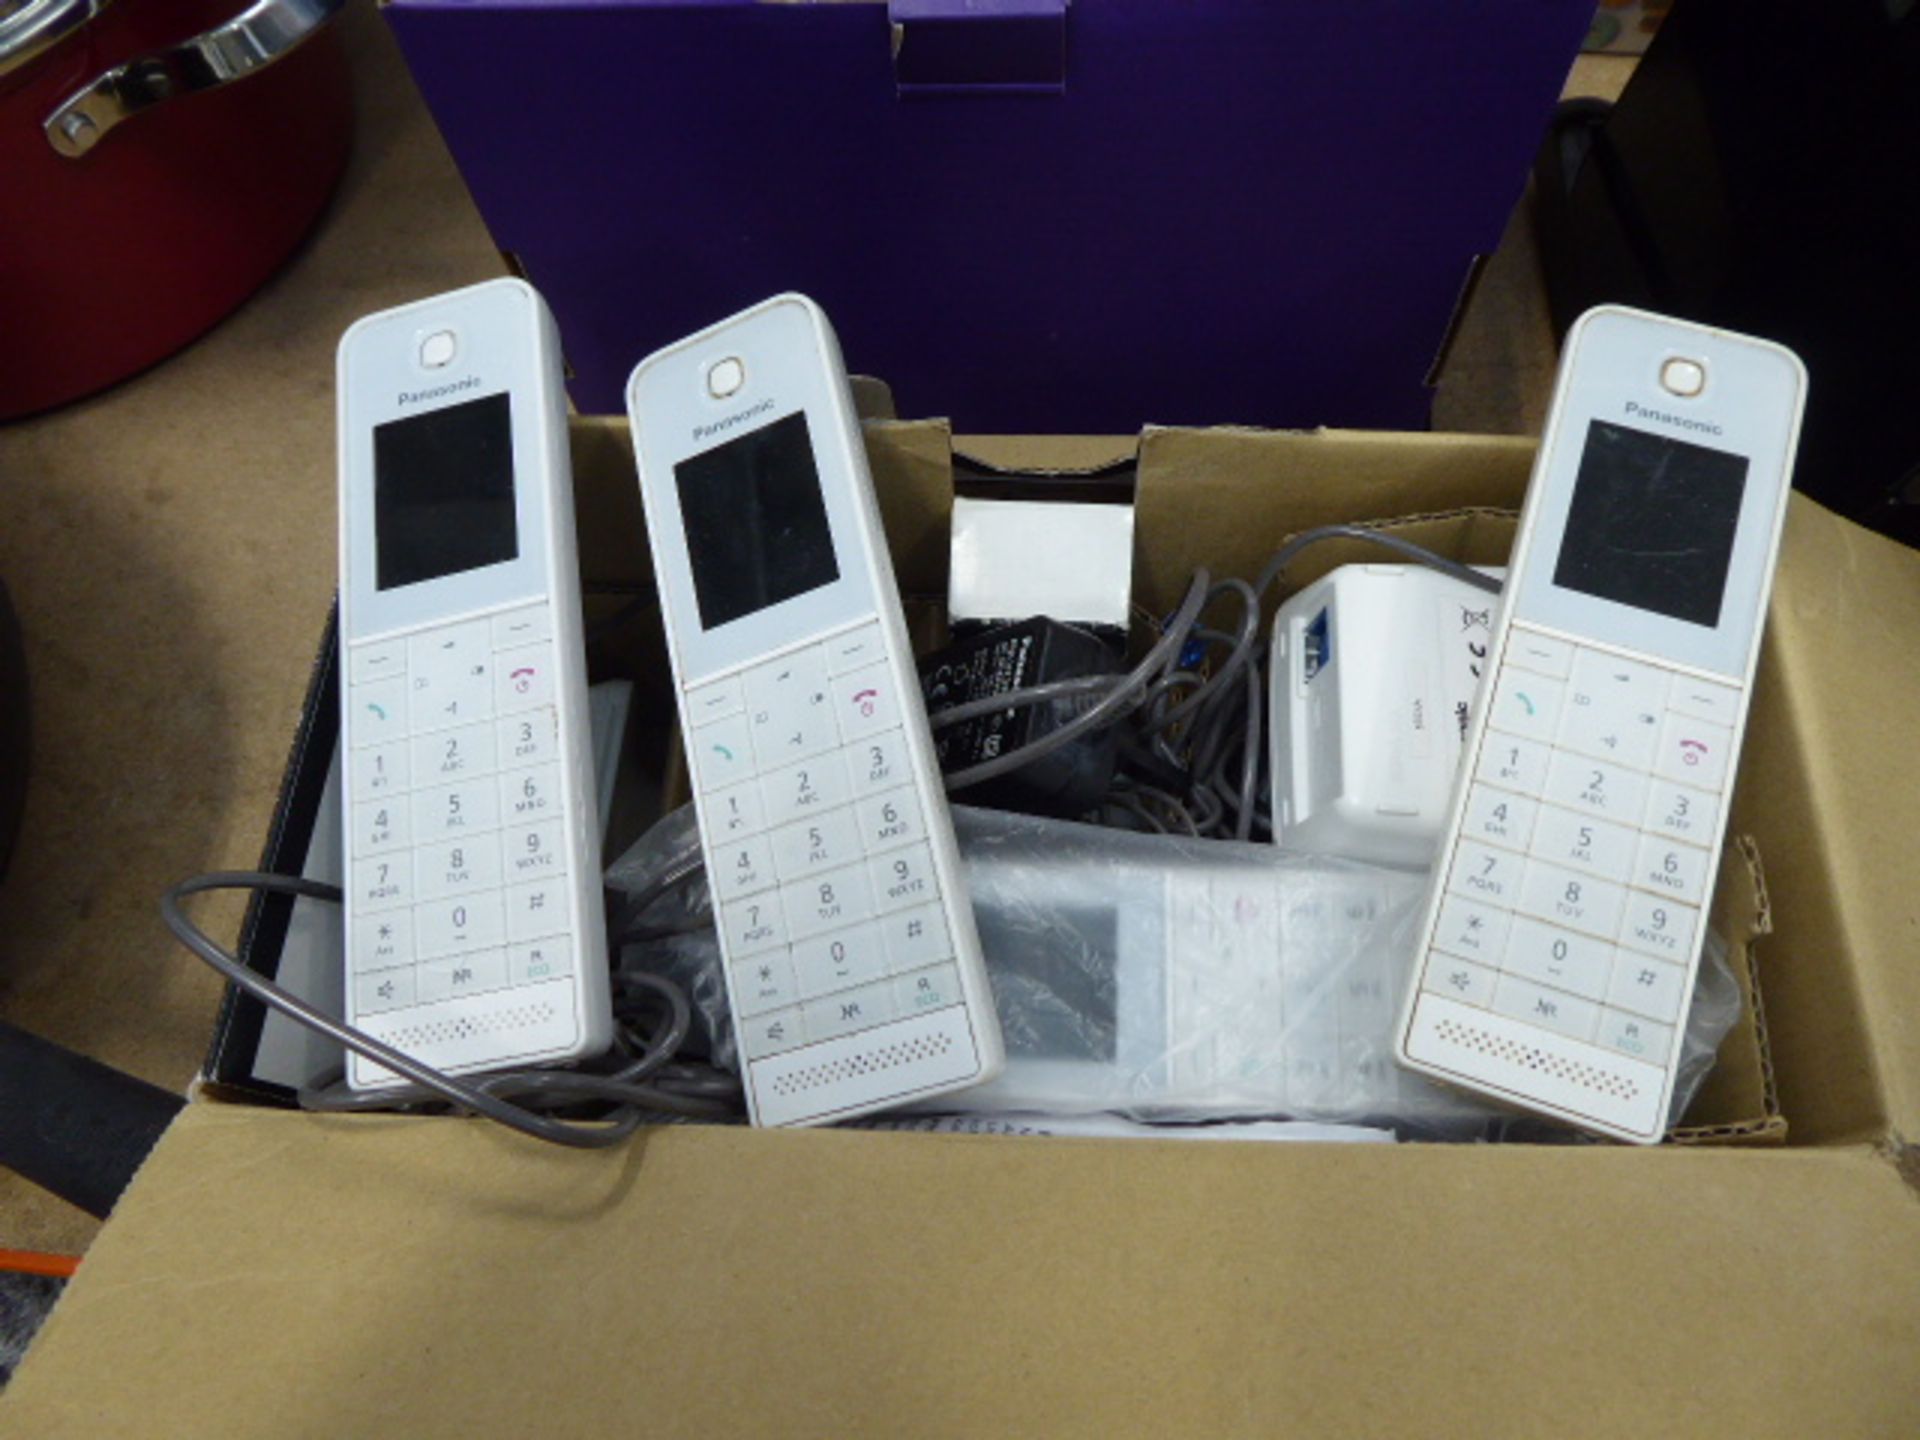 Panasonic KXTG224 digital cordless phone with answering machine